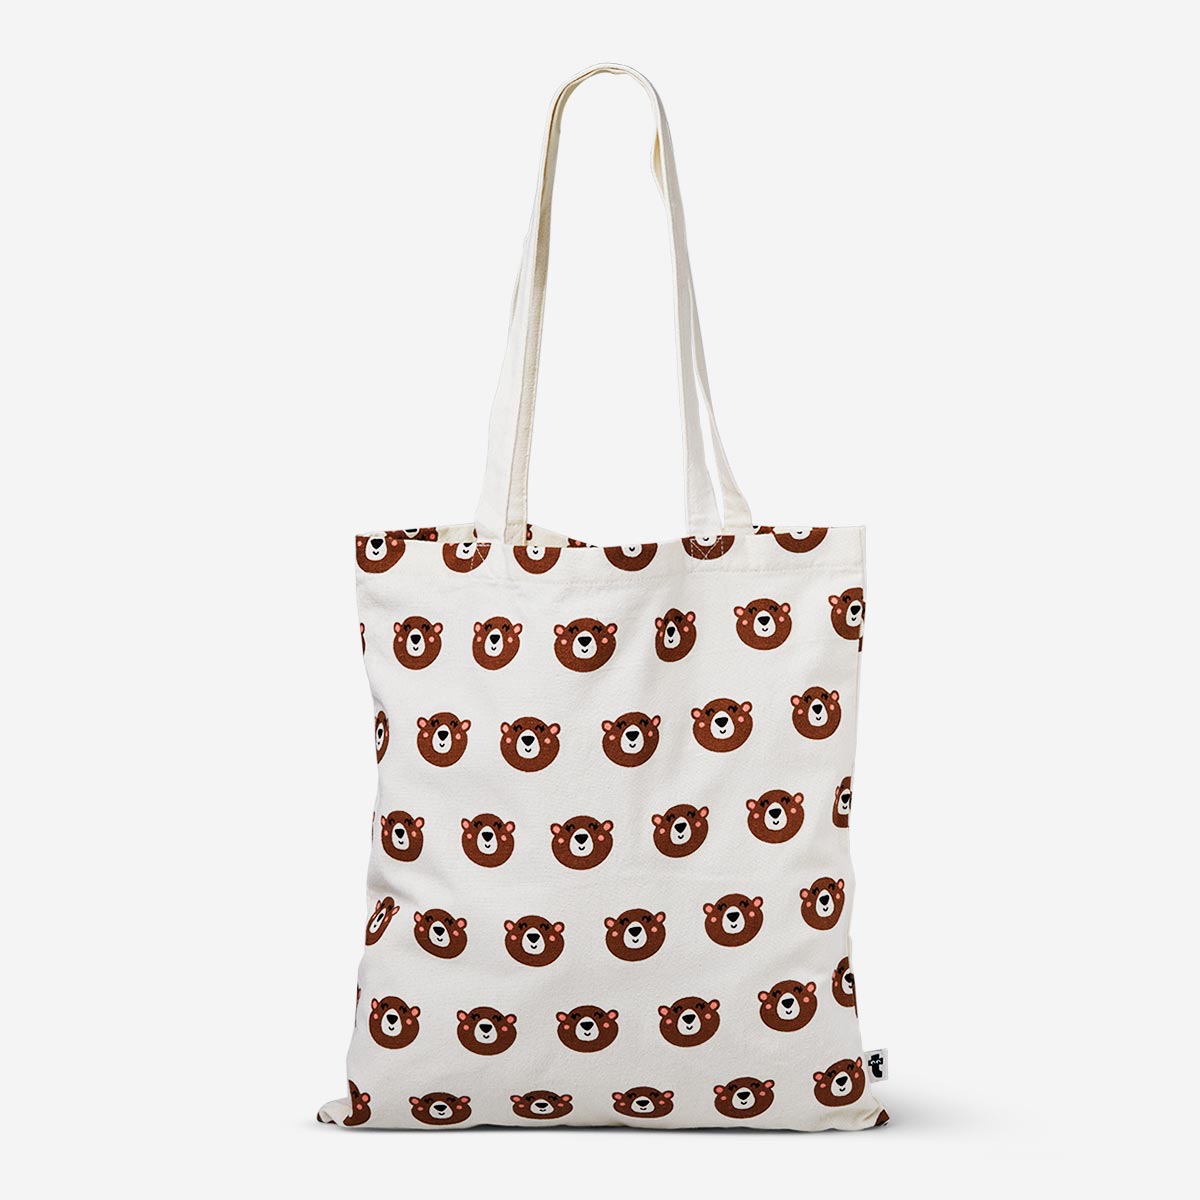 Flying Tiger Copenhagen - This tote bag has definitely raised a